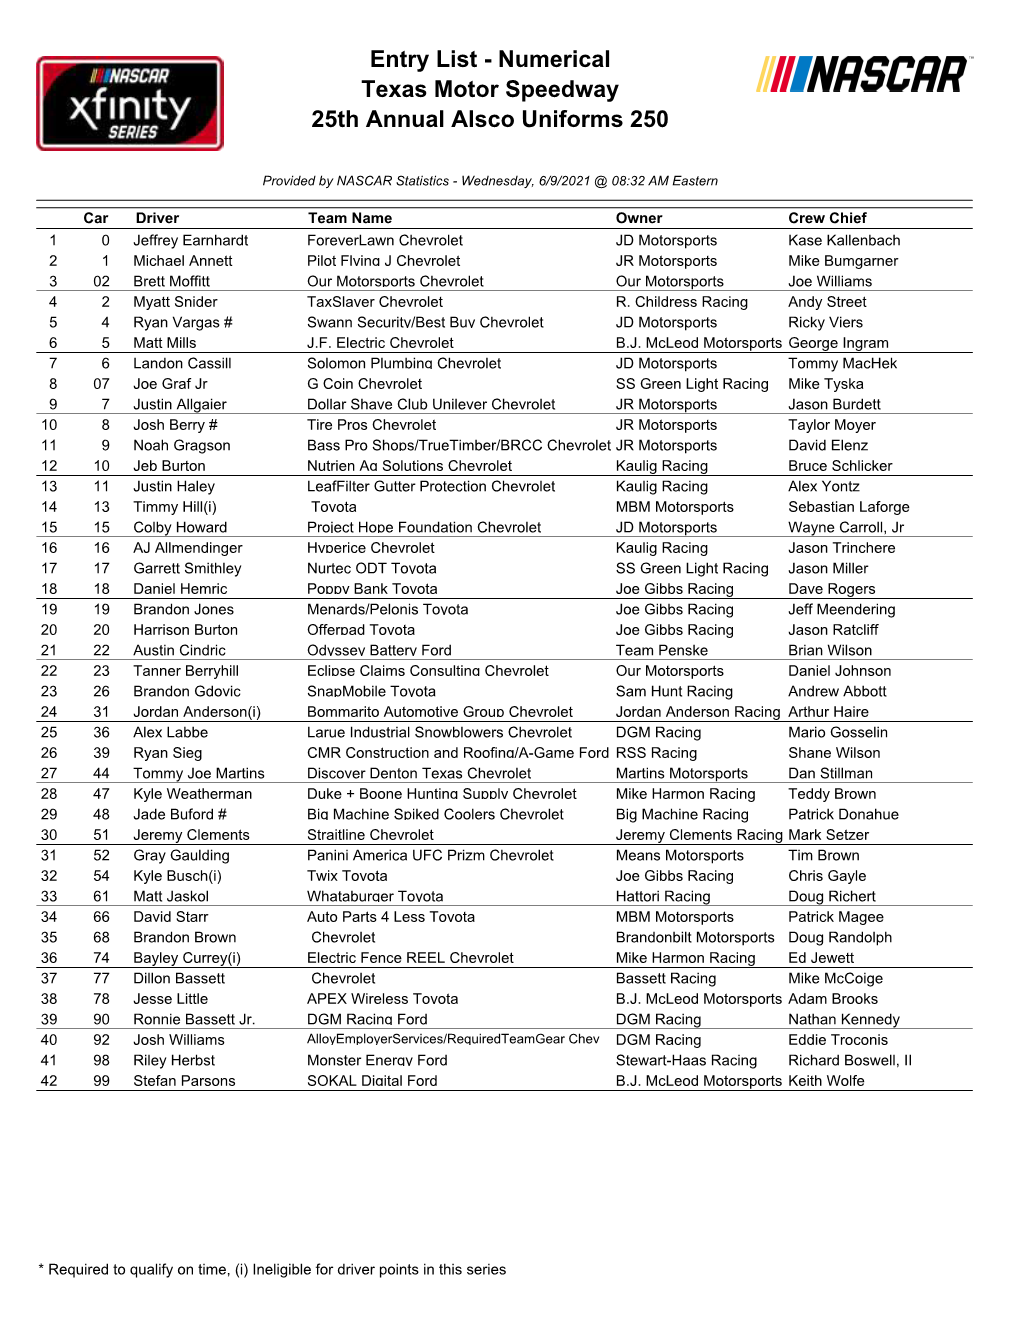 Entry List - Numerical Texas Motor Speedway 25Th Annual Alsco Uniforms 250